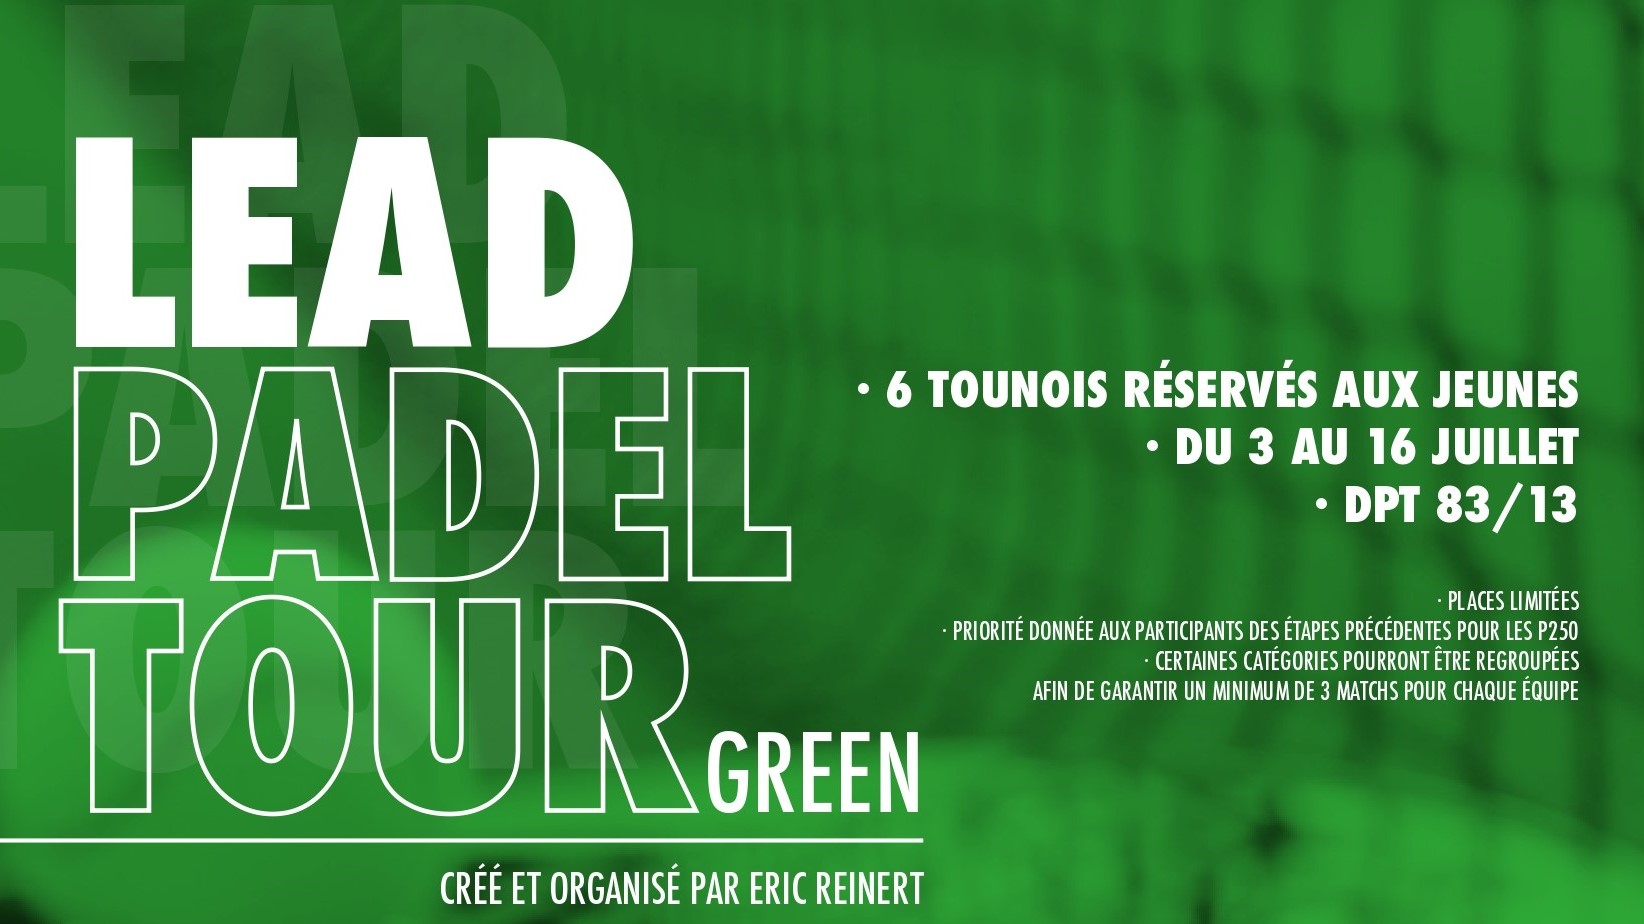 Lederen Padel Tour, et kredsløb for unge!